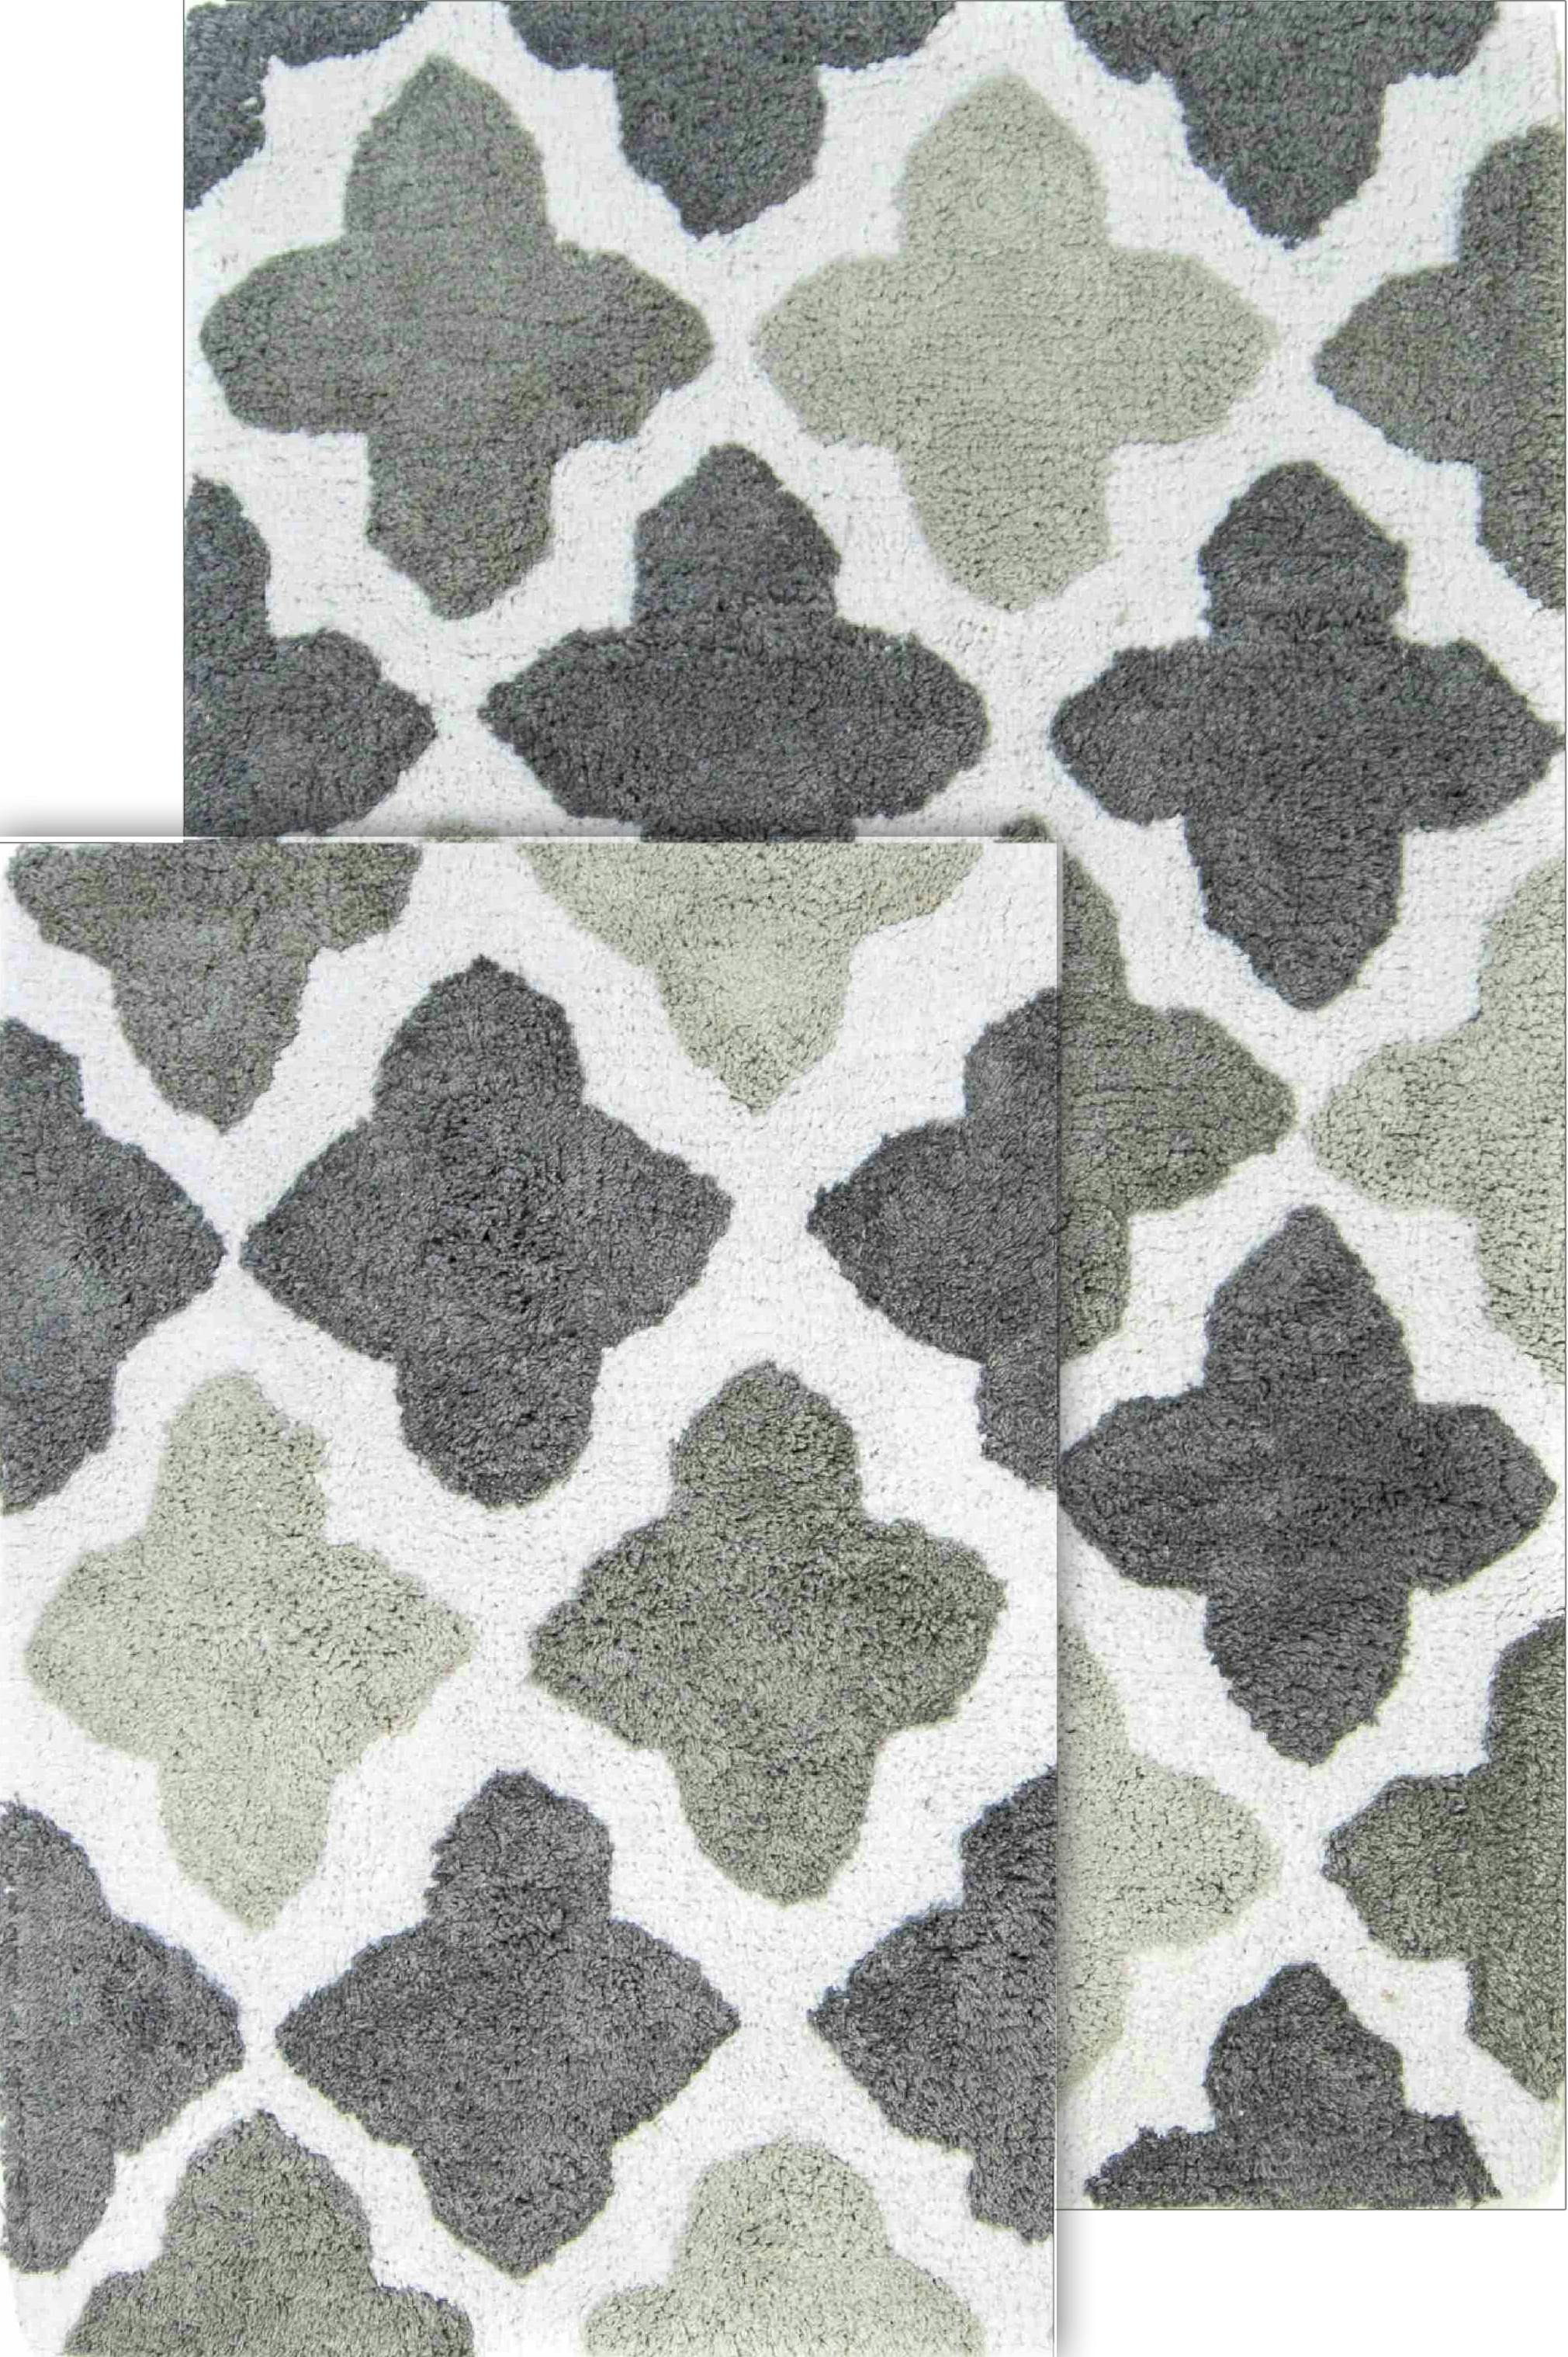 Moroccan Tiles Inspired Plush Gray Bath Rug Set - 2 Pieces